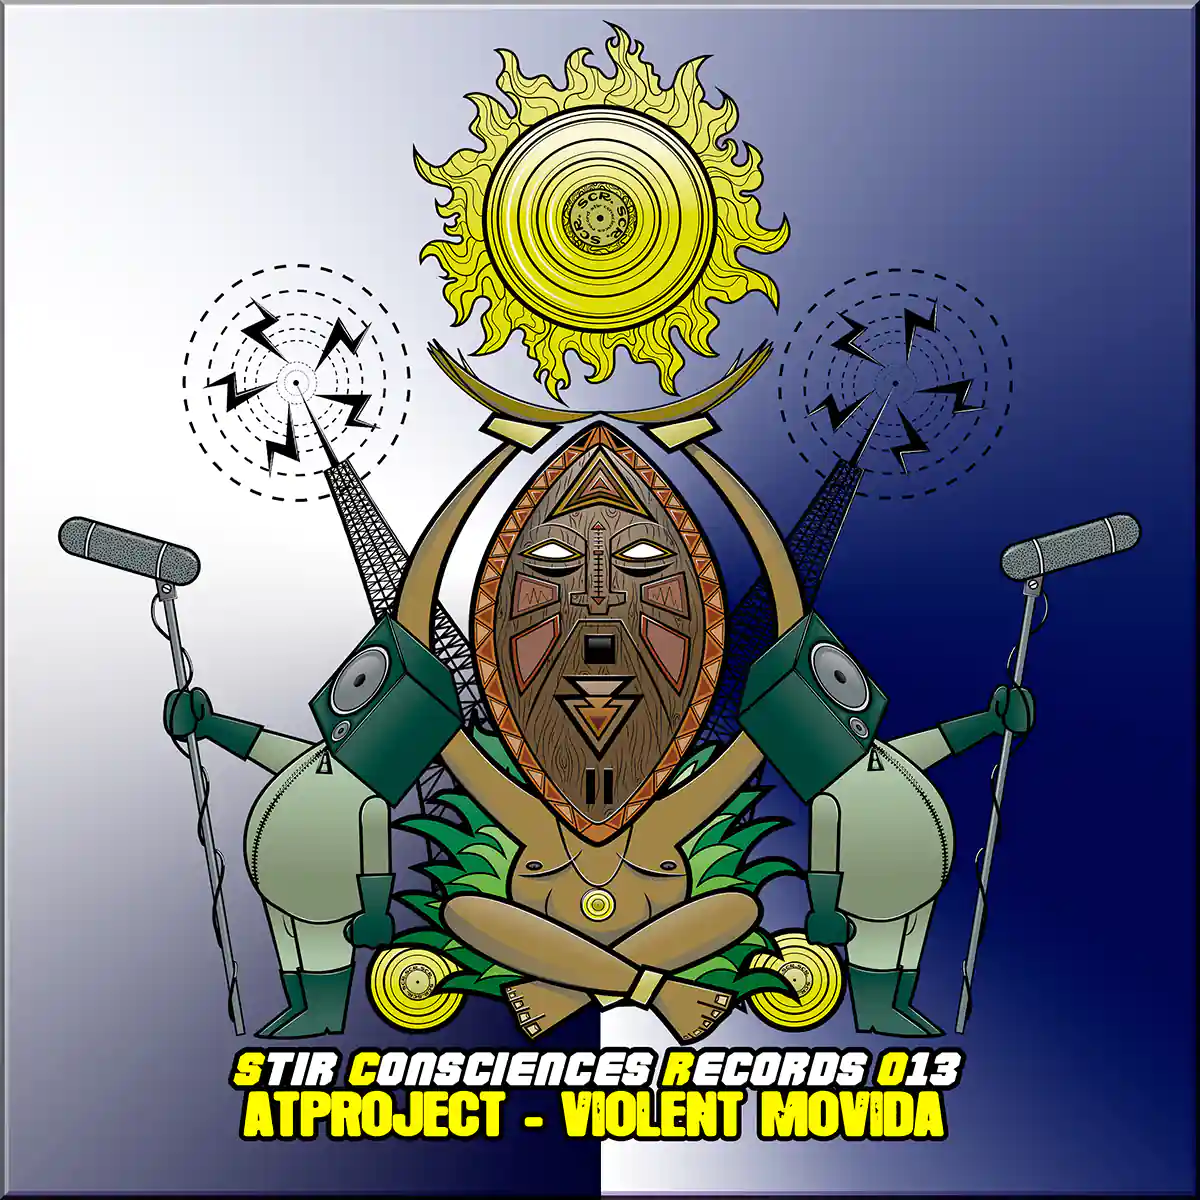 ATProject - Violent Movida - Stir Consciences Records 013